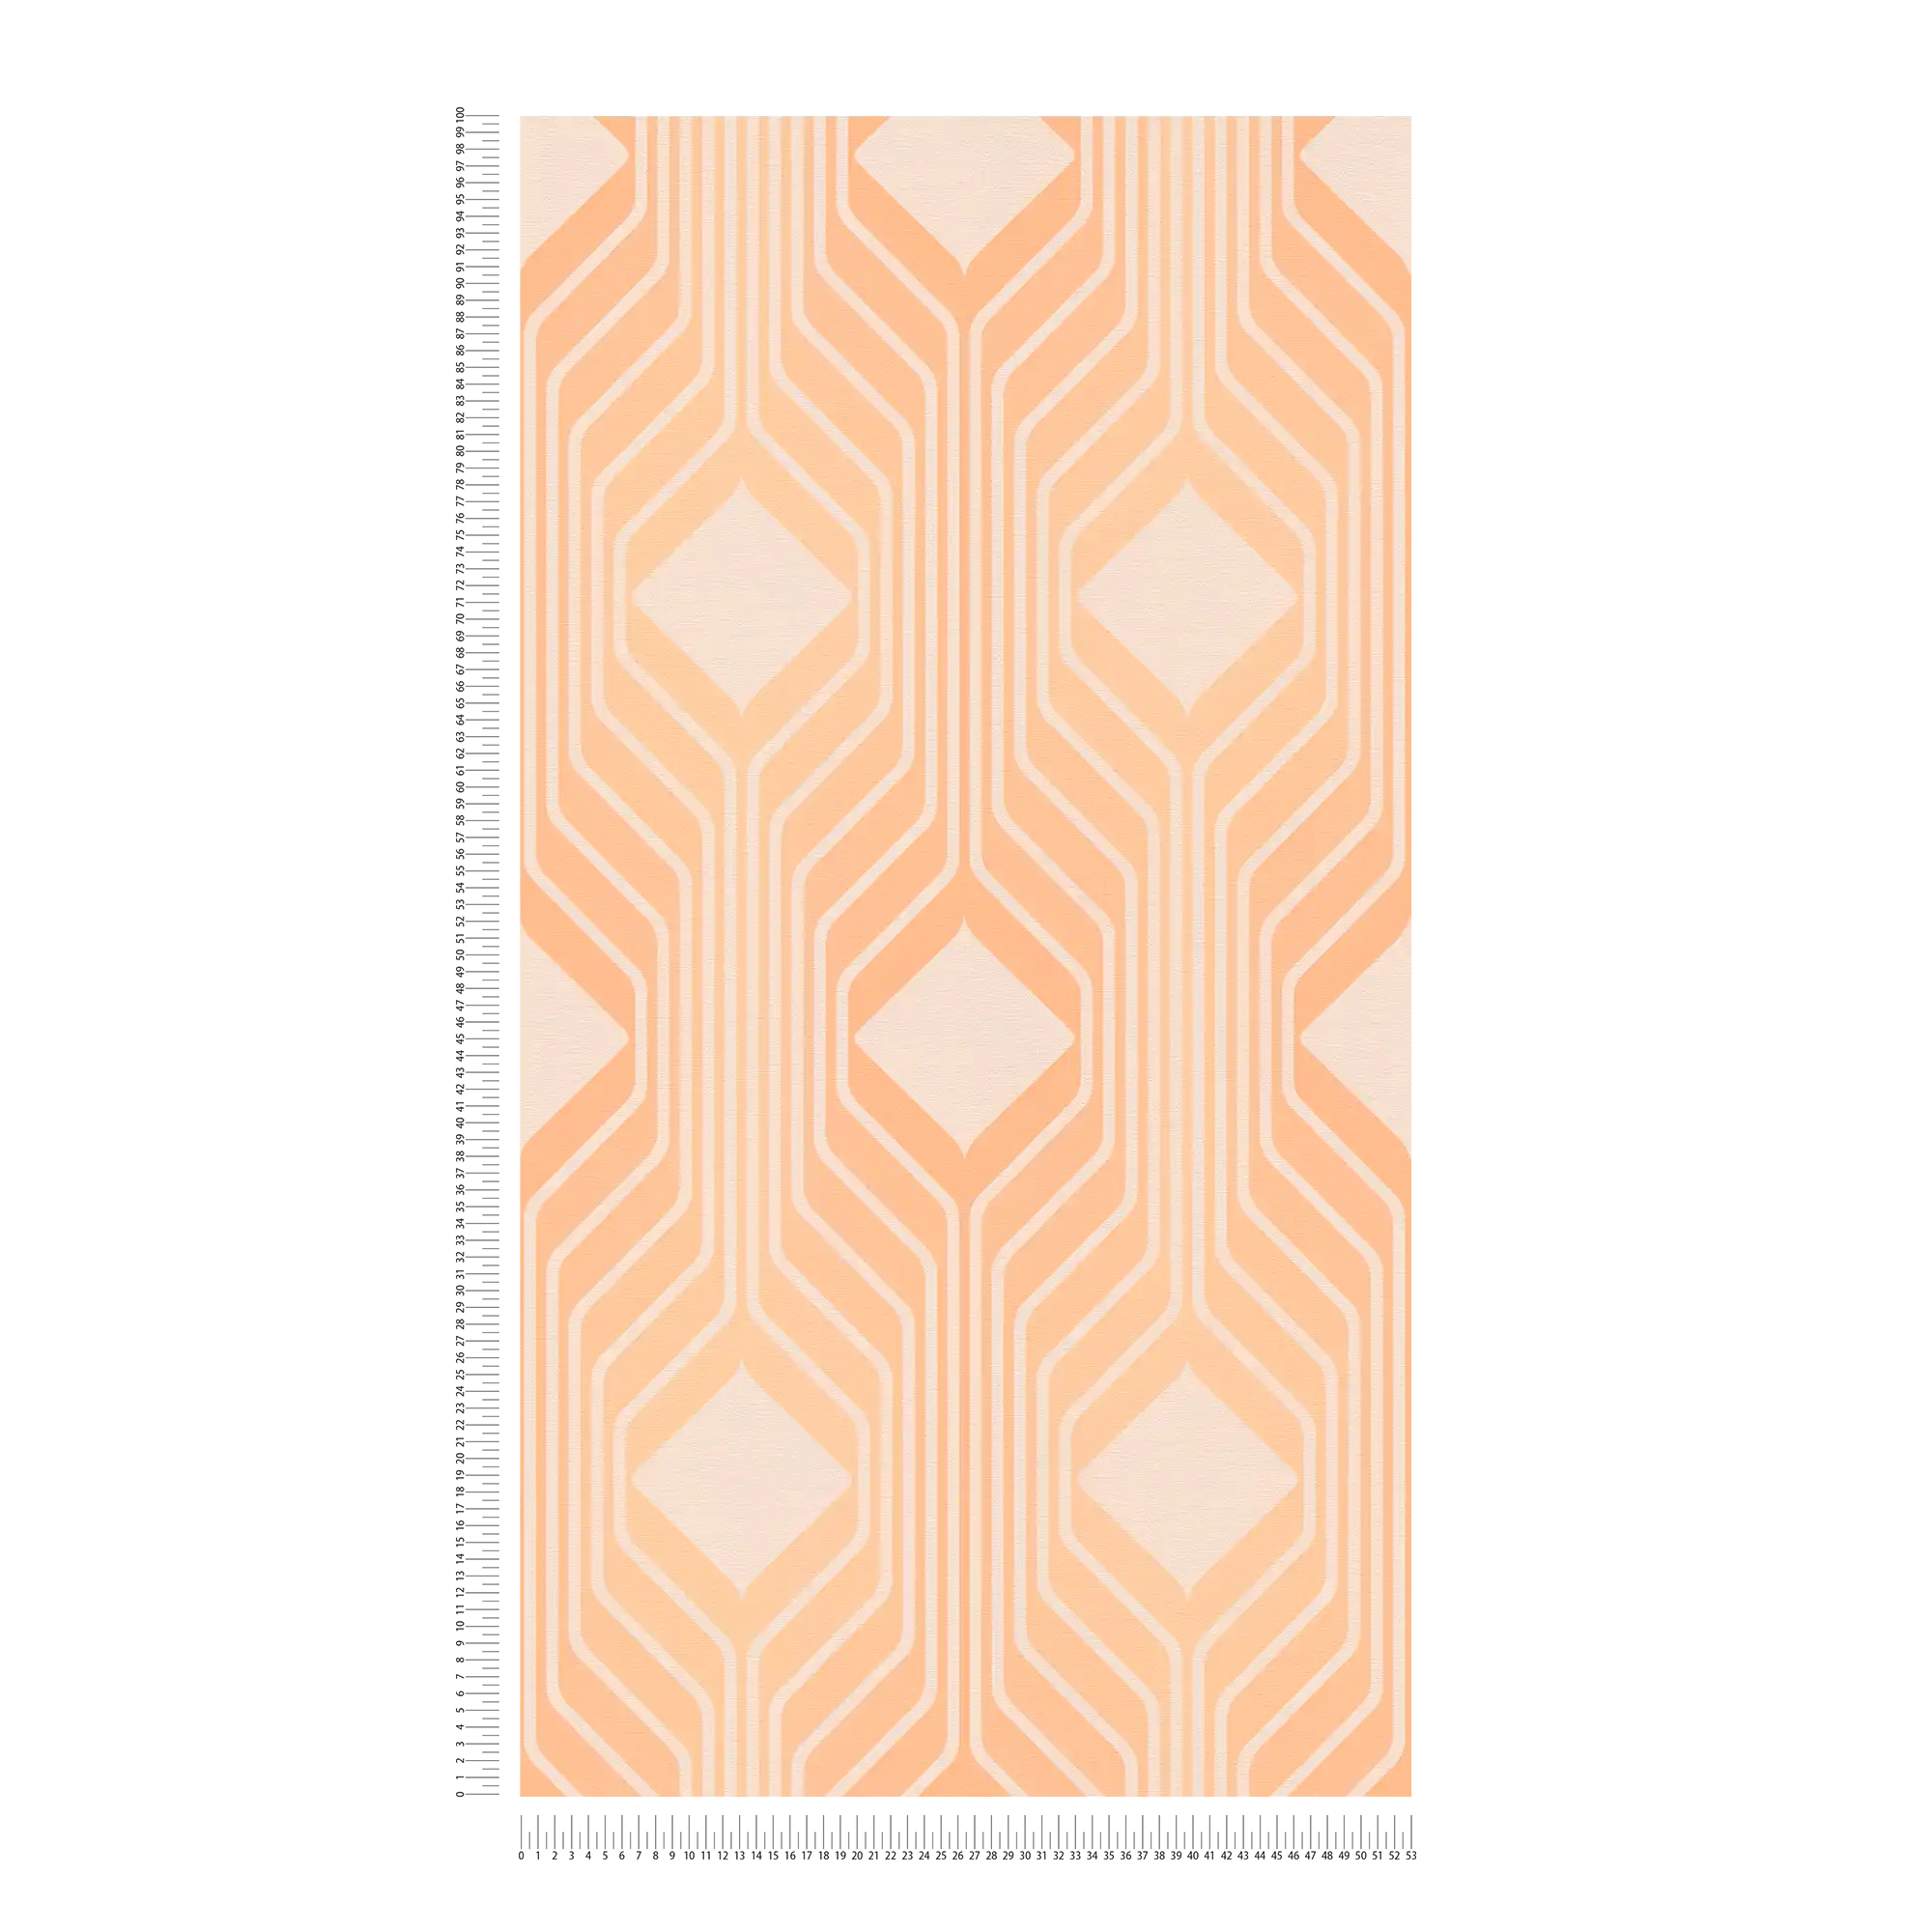             Retro wallpaper with diamond pattern in warm colours - orange, beige
        